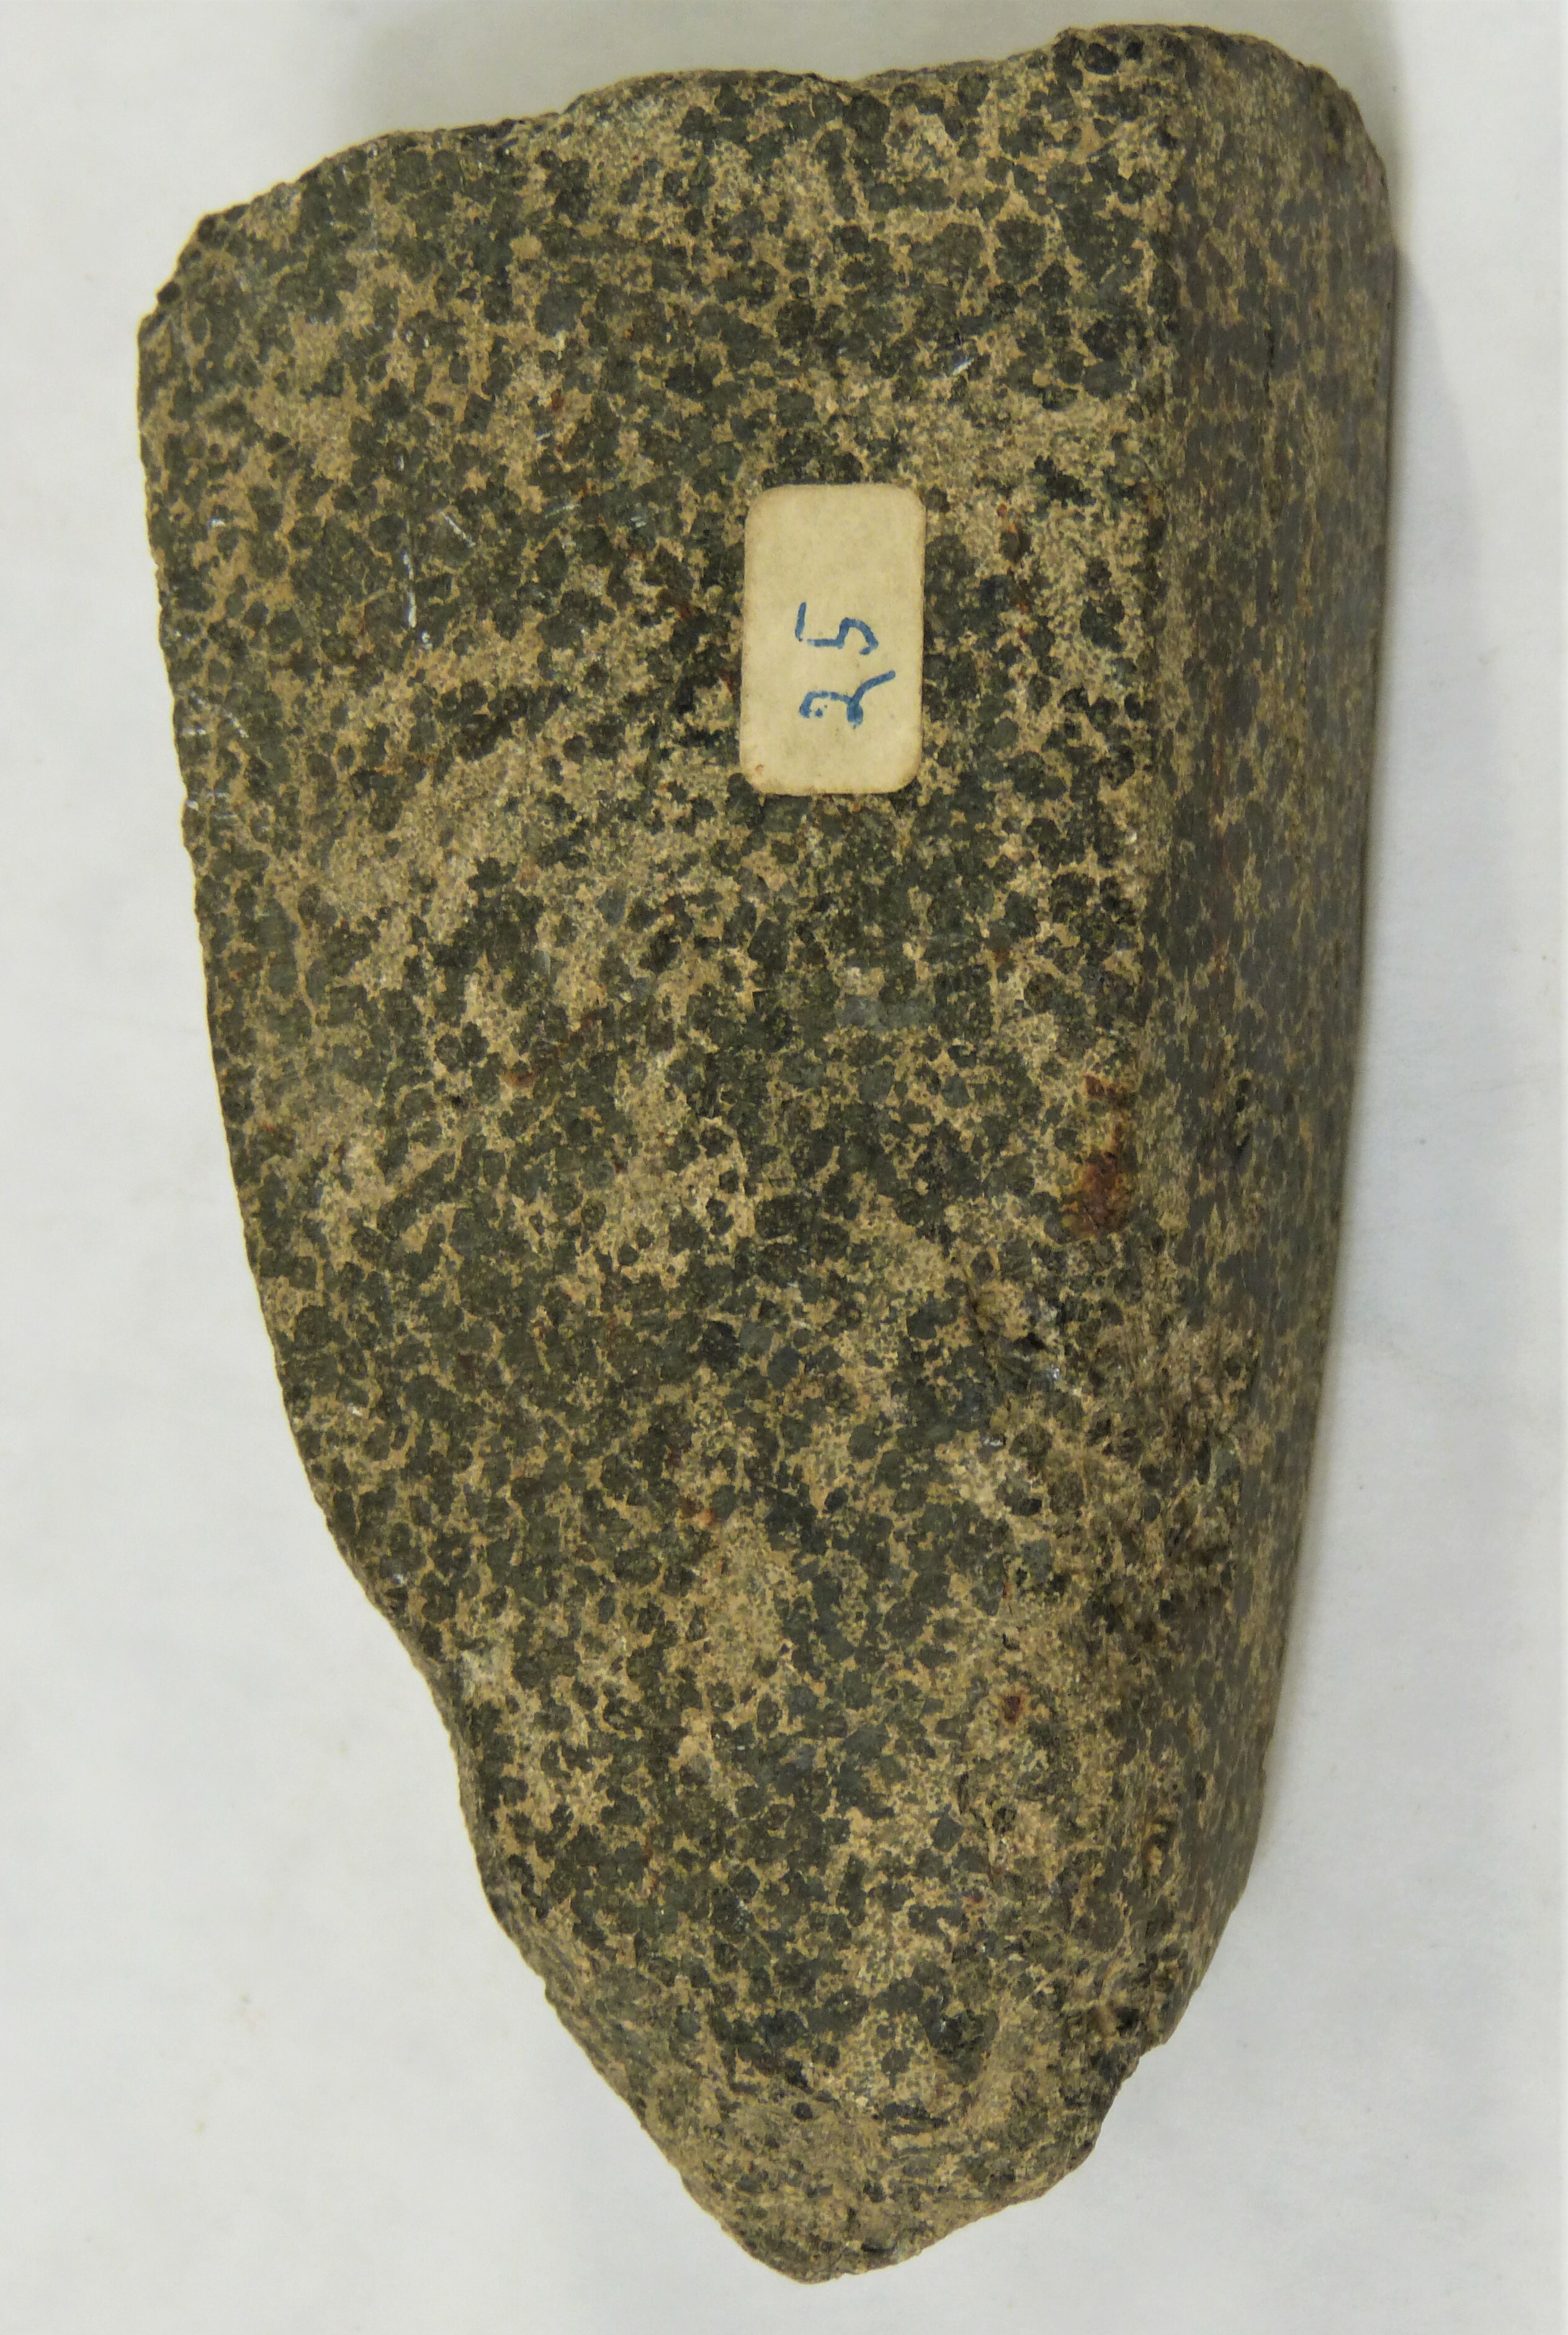 Steinbeilfragment aus Granit (Städt. Hellweg-Museum Geseke CC BY-NC-SA)